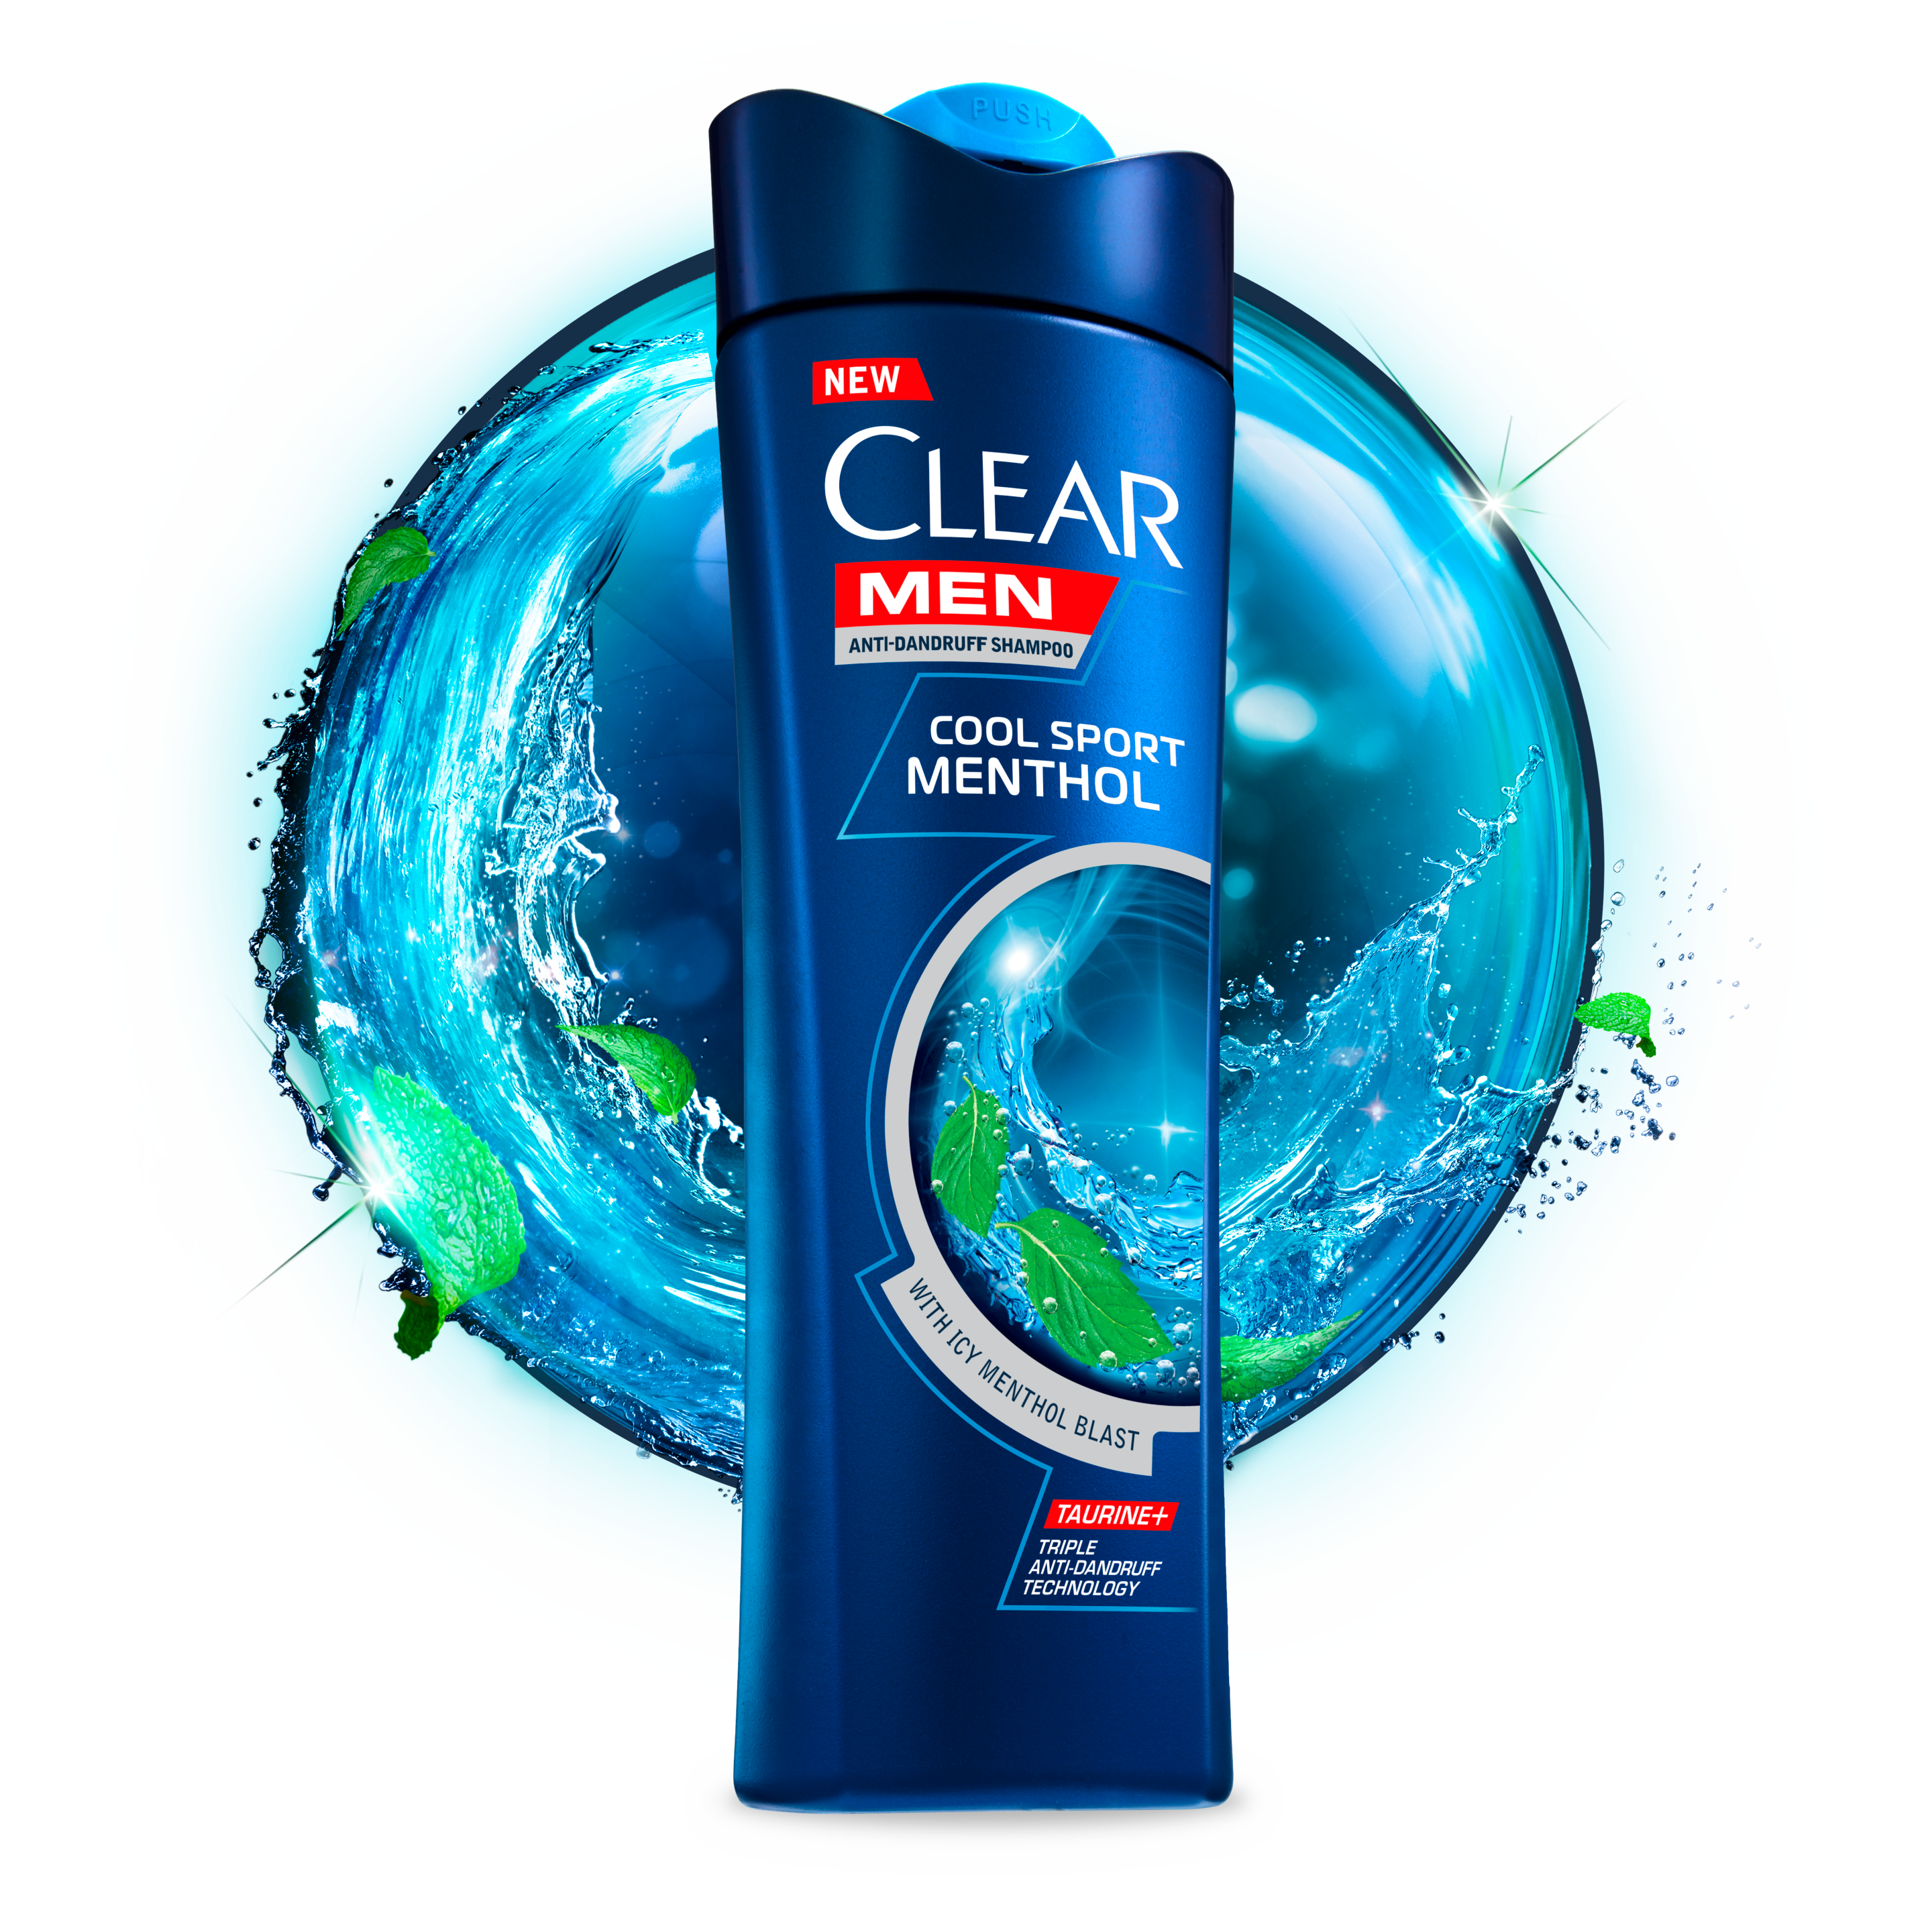 CLEAR Men Cool Sport Menthol Anti-dandruff Shampoo